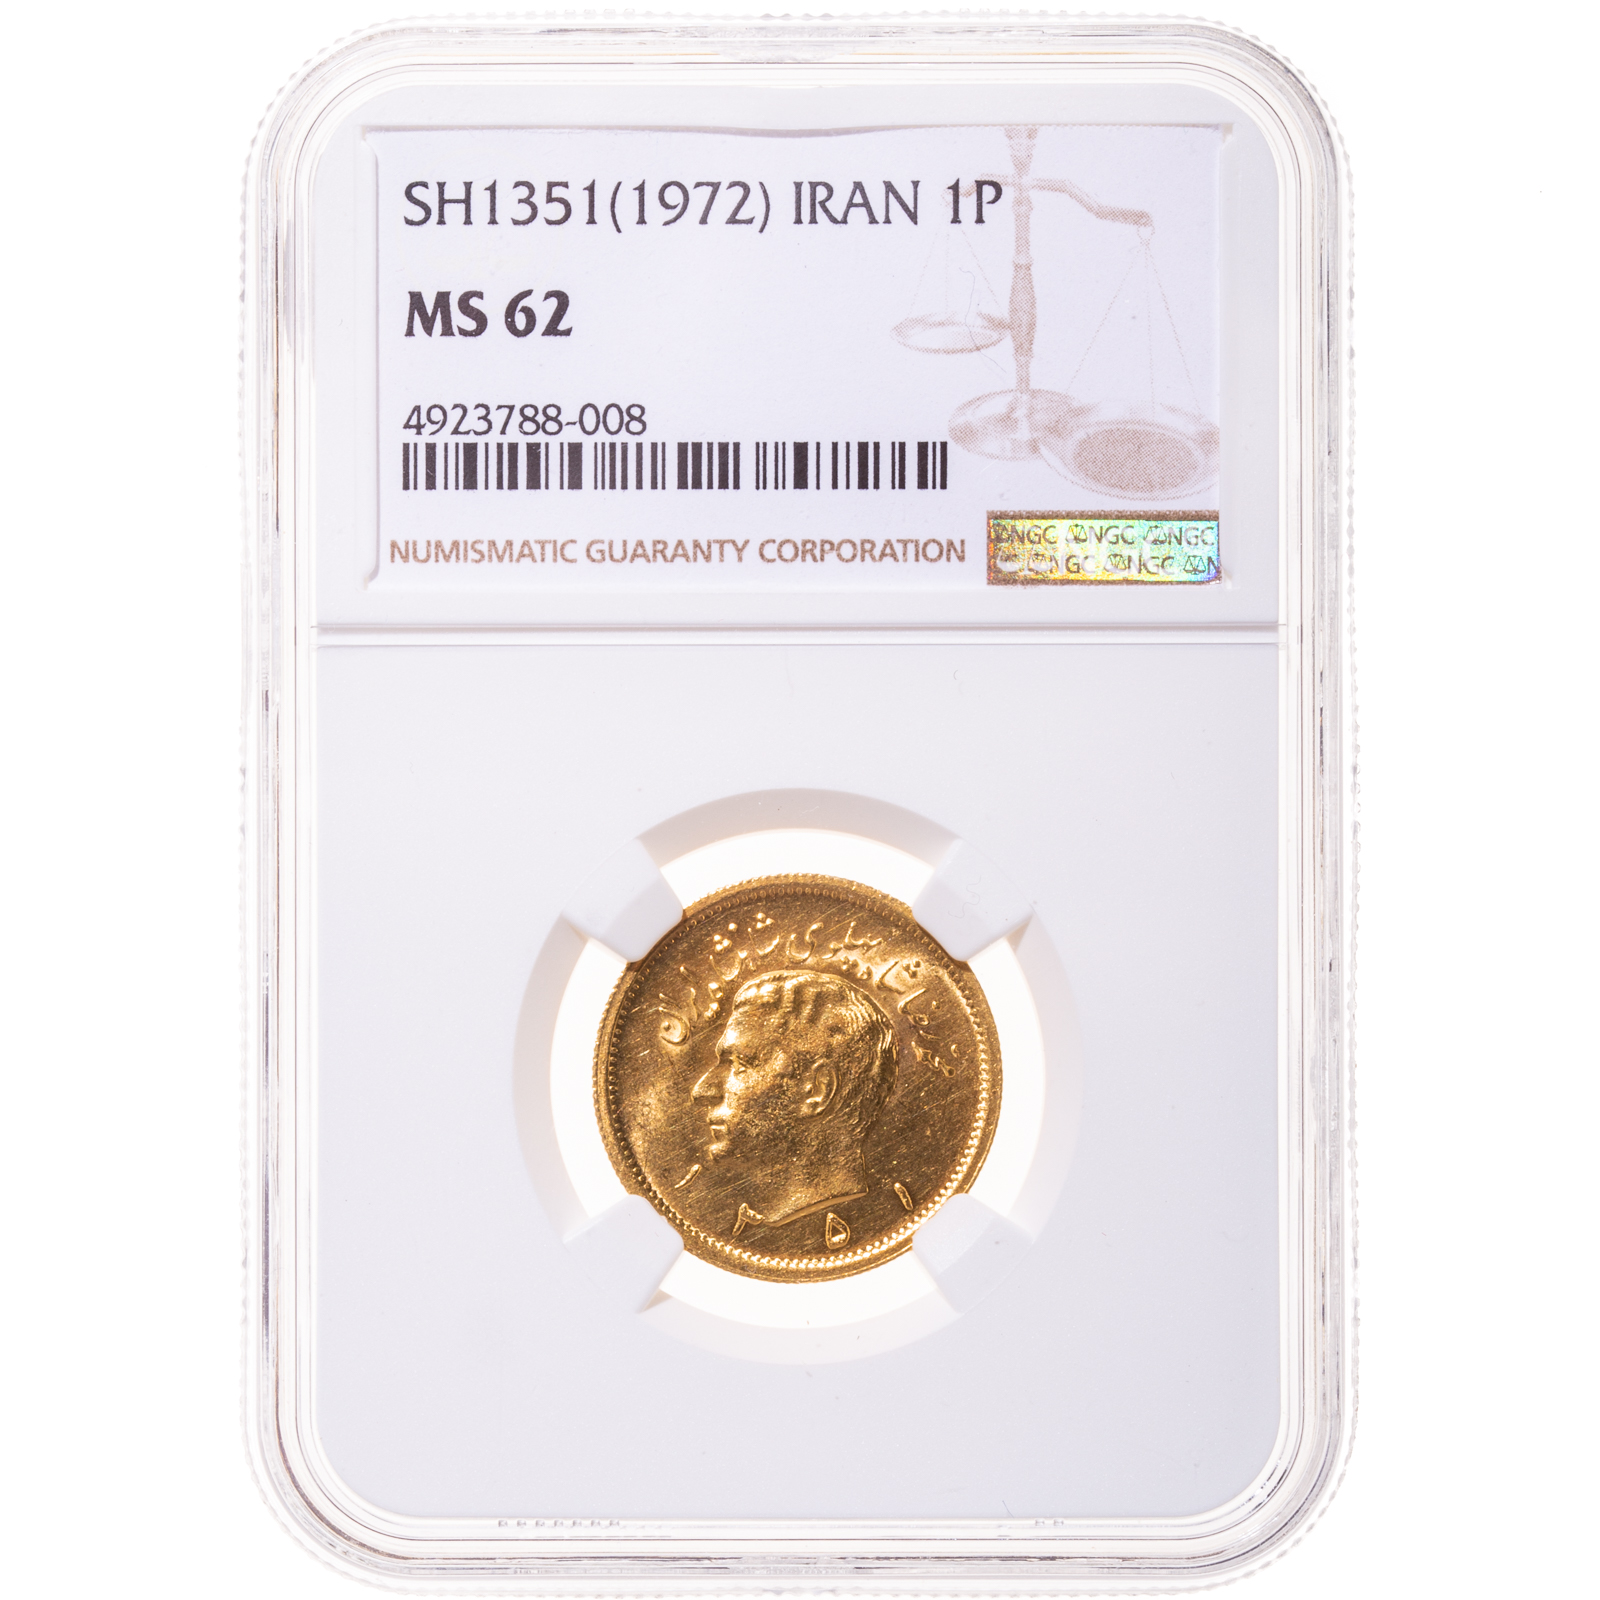 1972 (SH 1351) IRAN GOLD 1 PAHLAVI